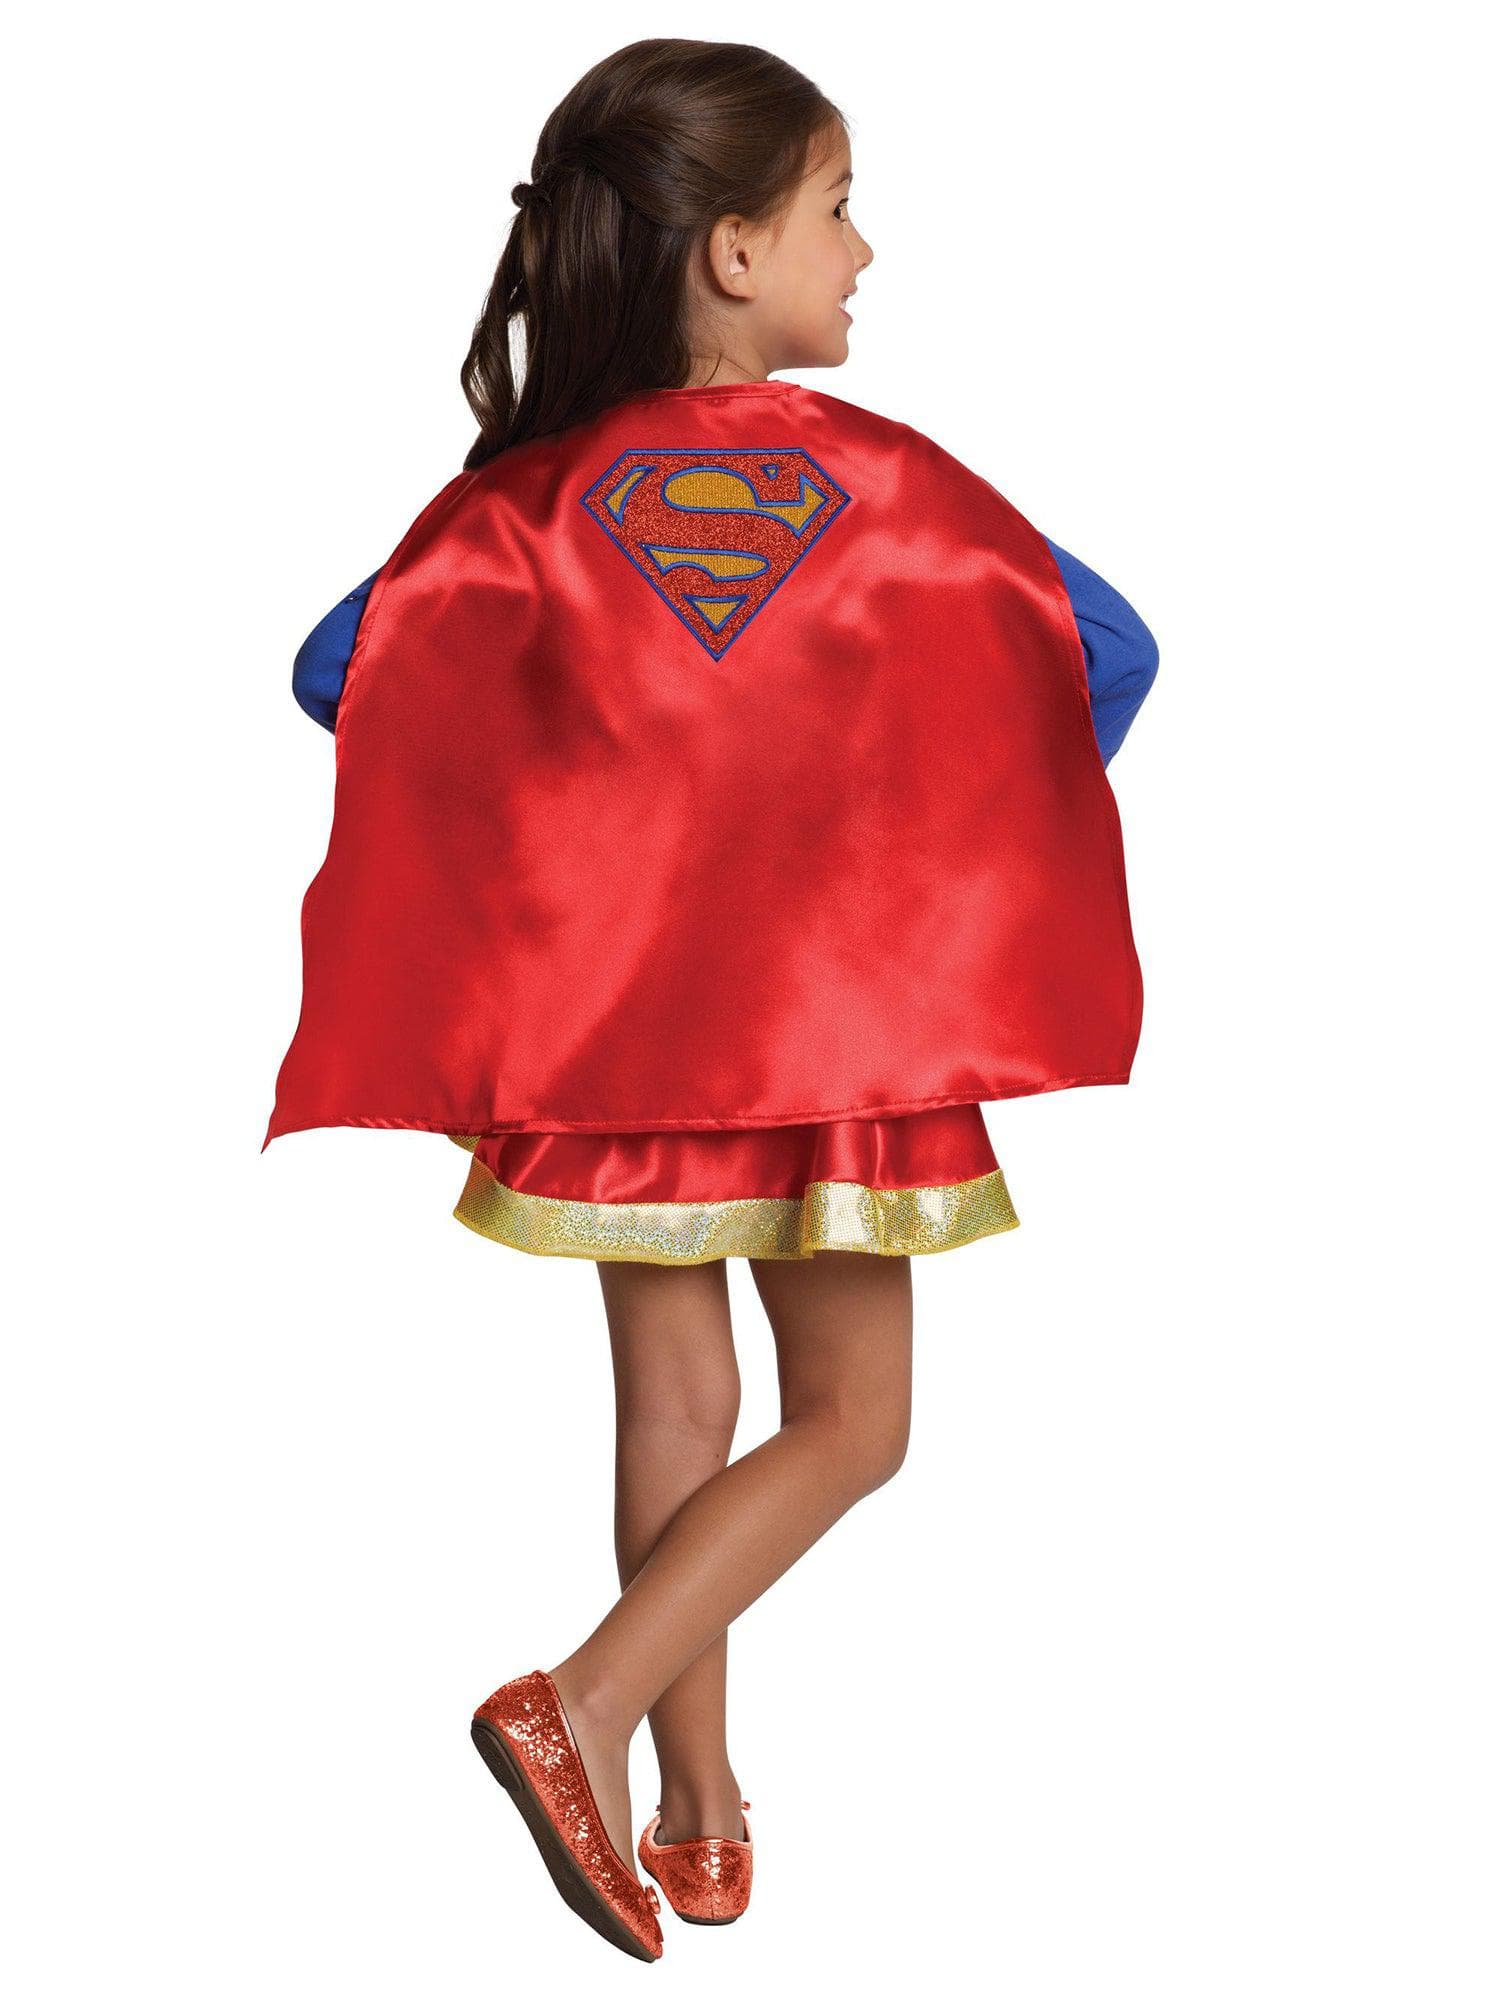 Girls' DC Superhero Girls Supergirl Cape and Skirt - costumes.com